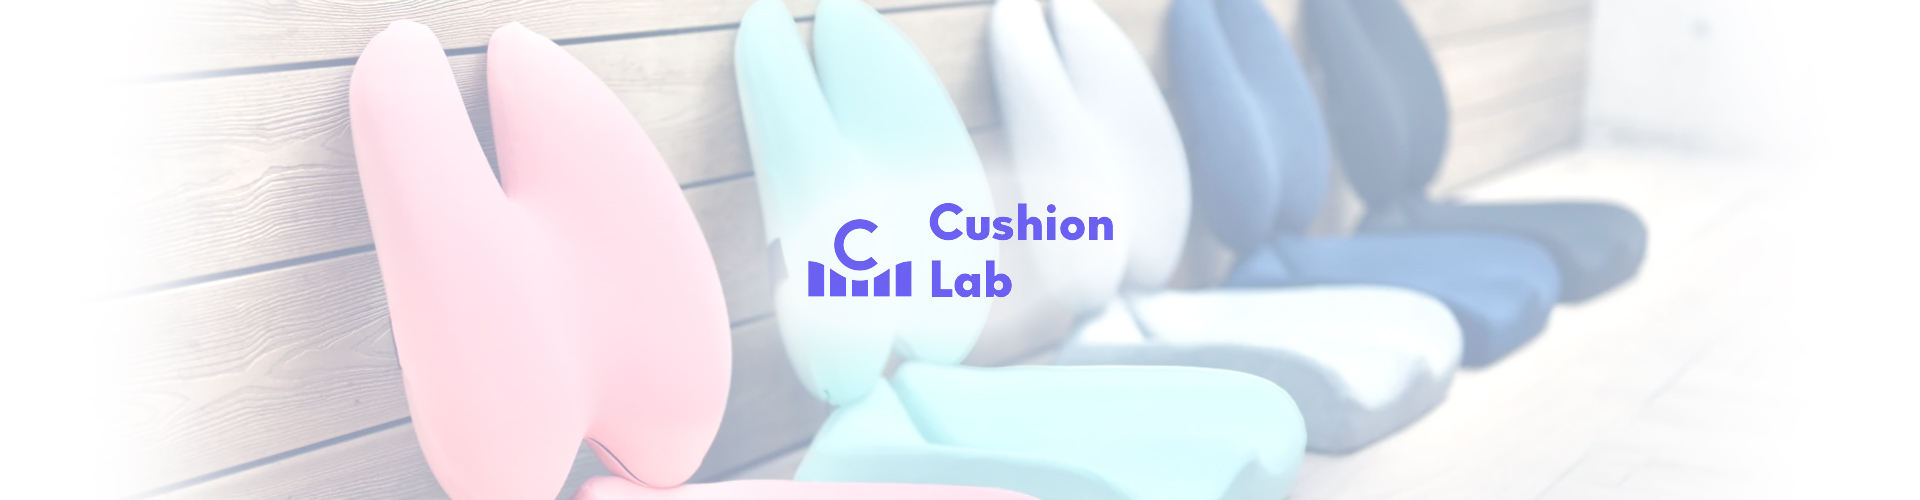 Cushion Lab banner